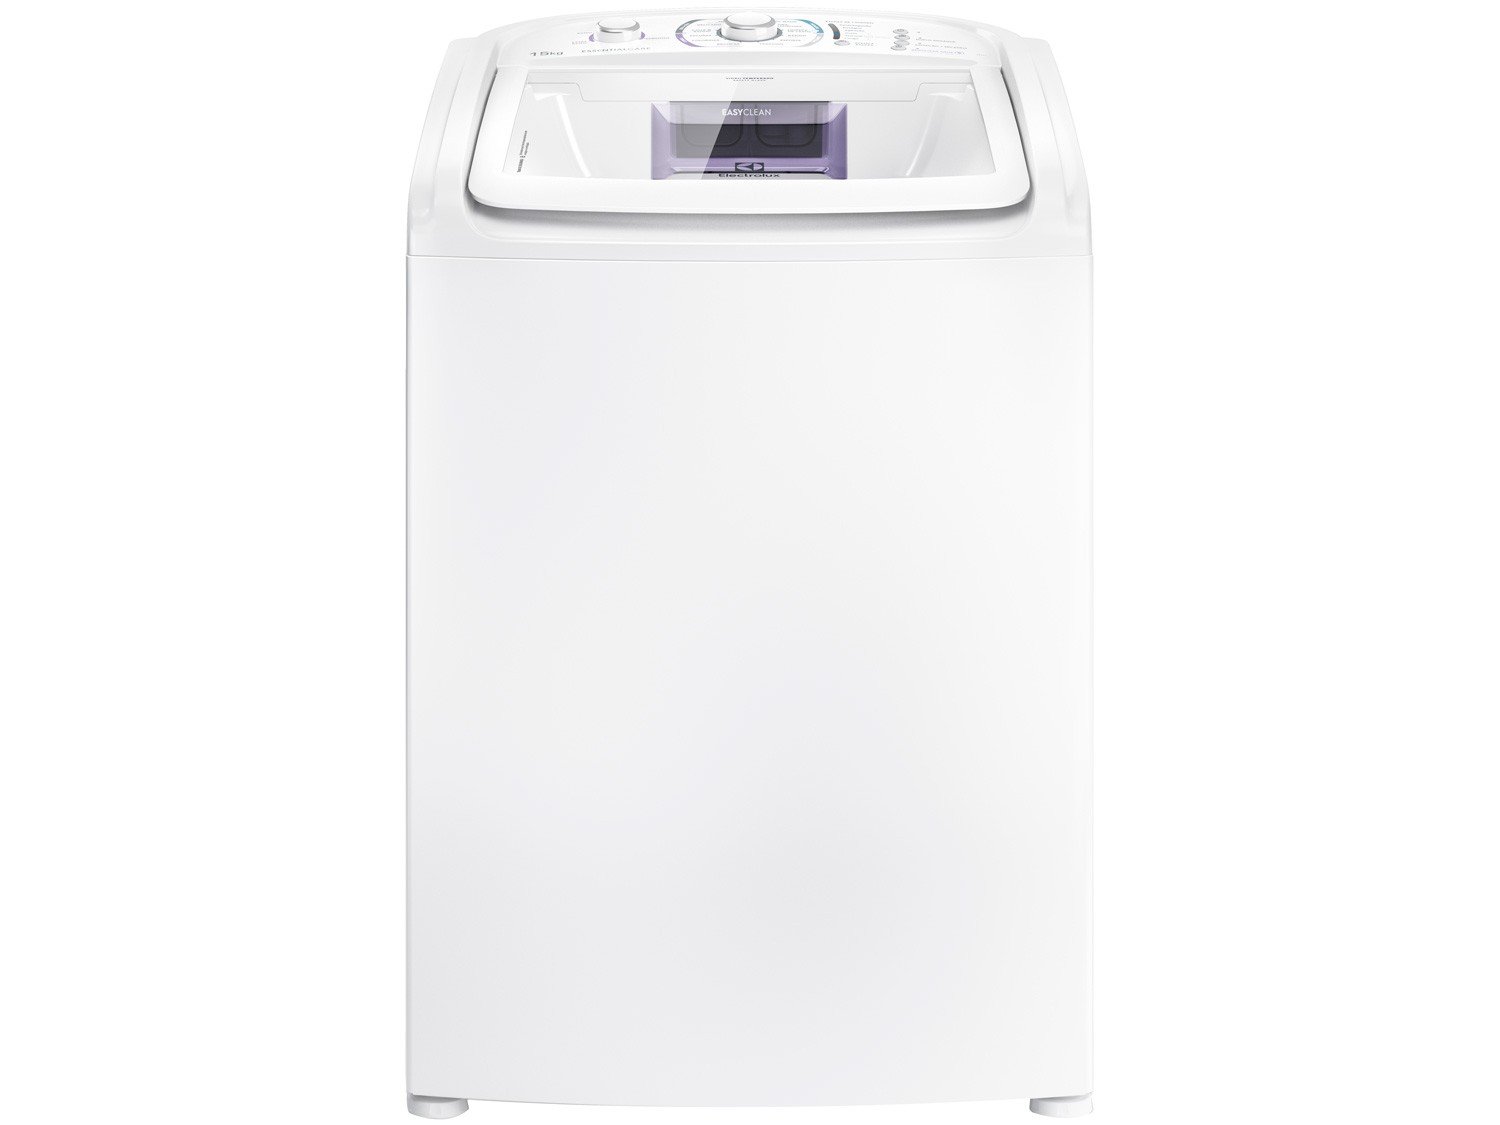 Lavadora de Roupas Electrolux Automática LES15 Essencial Care 15kg – Branca - 220v